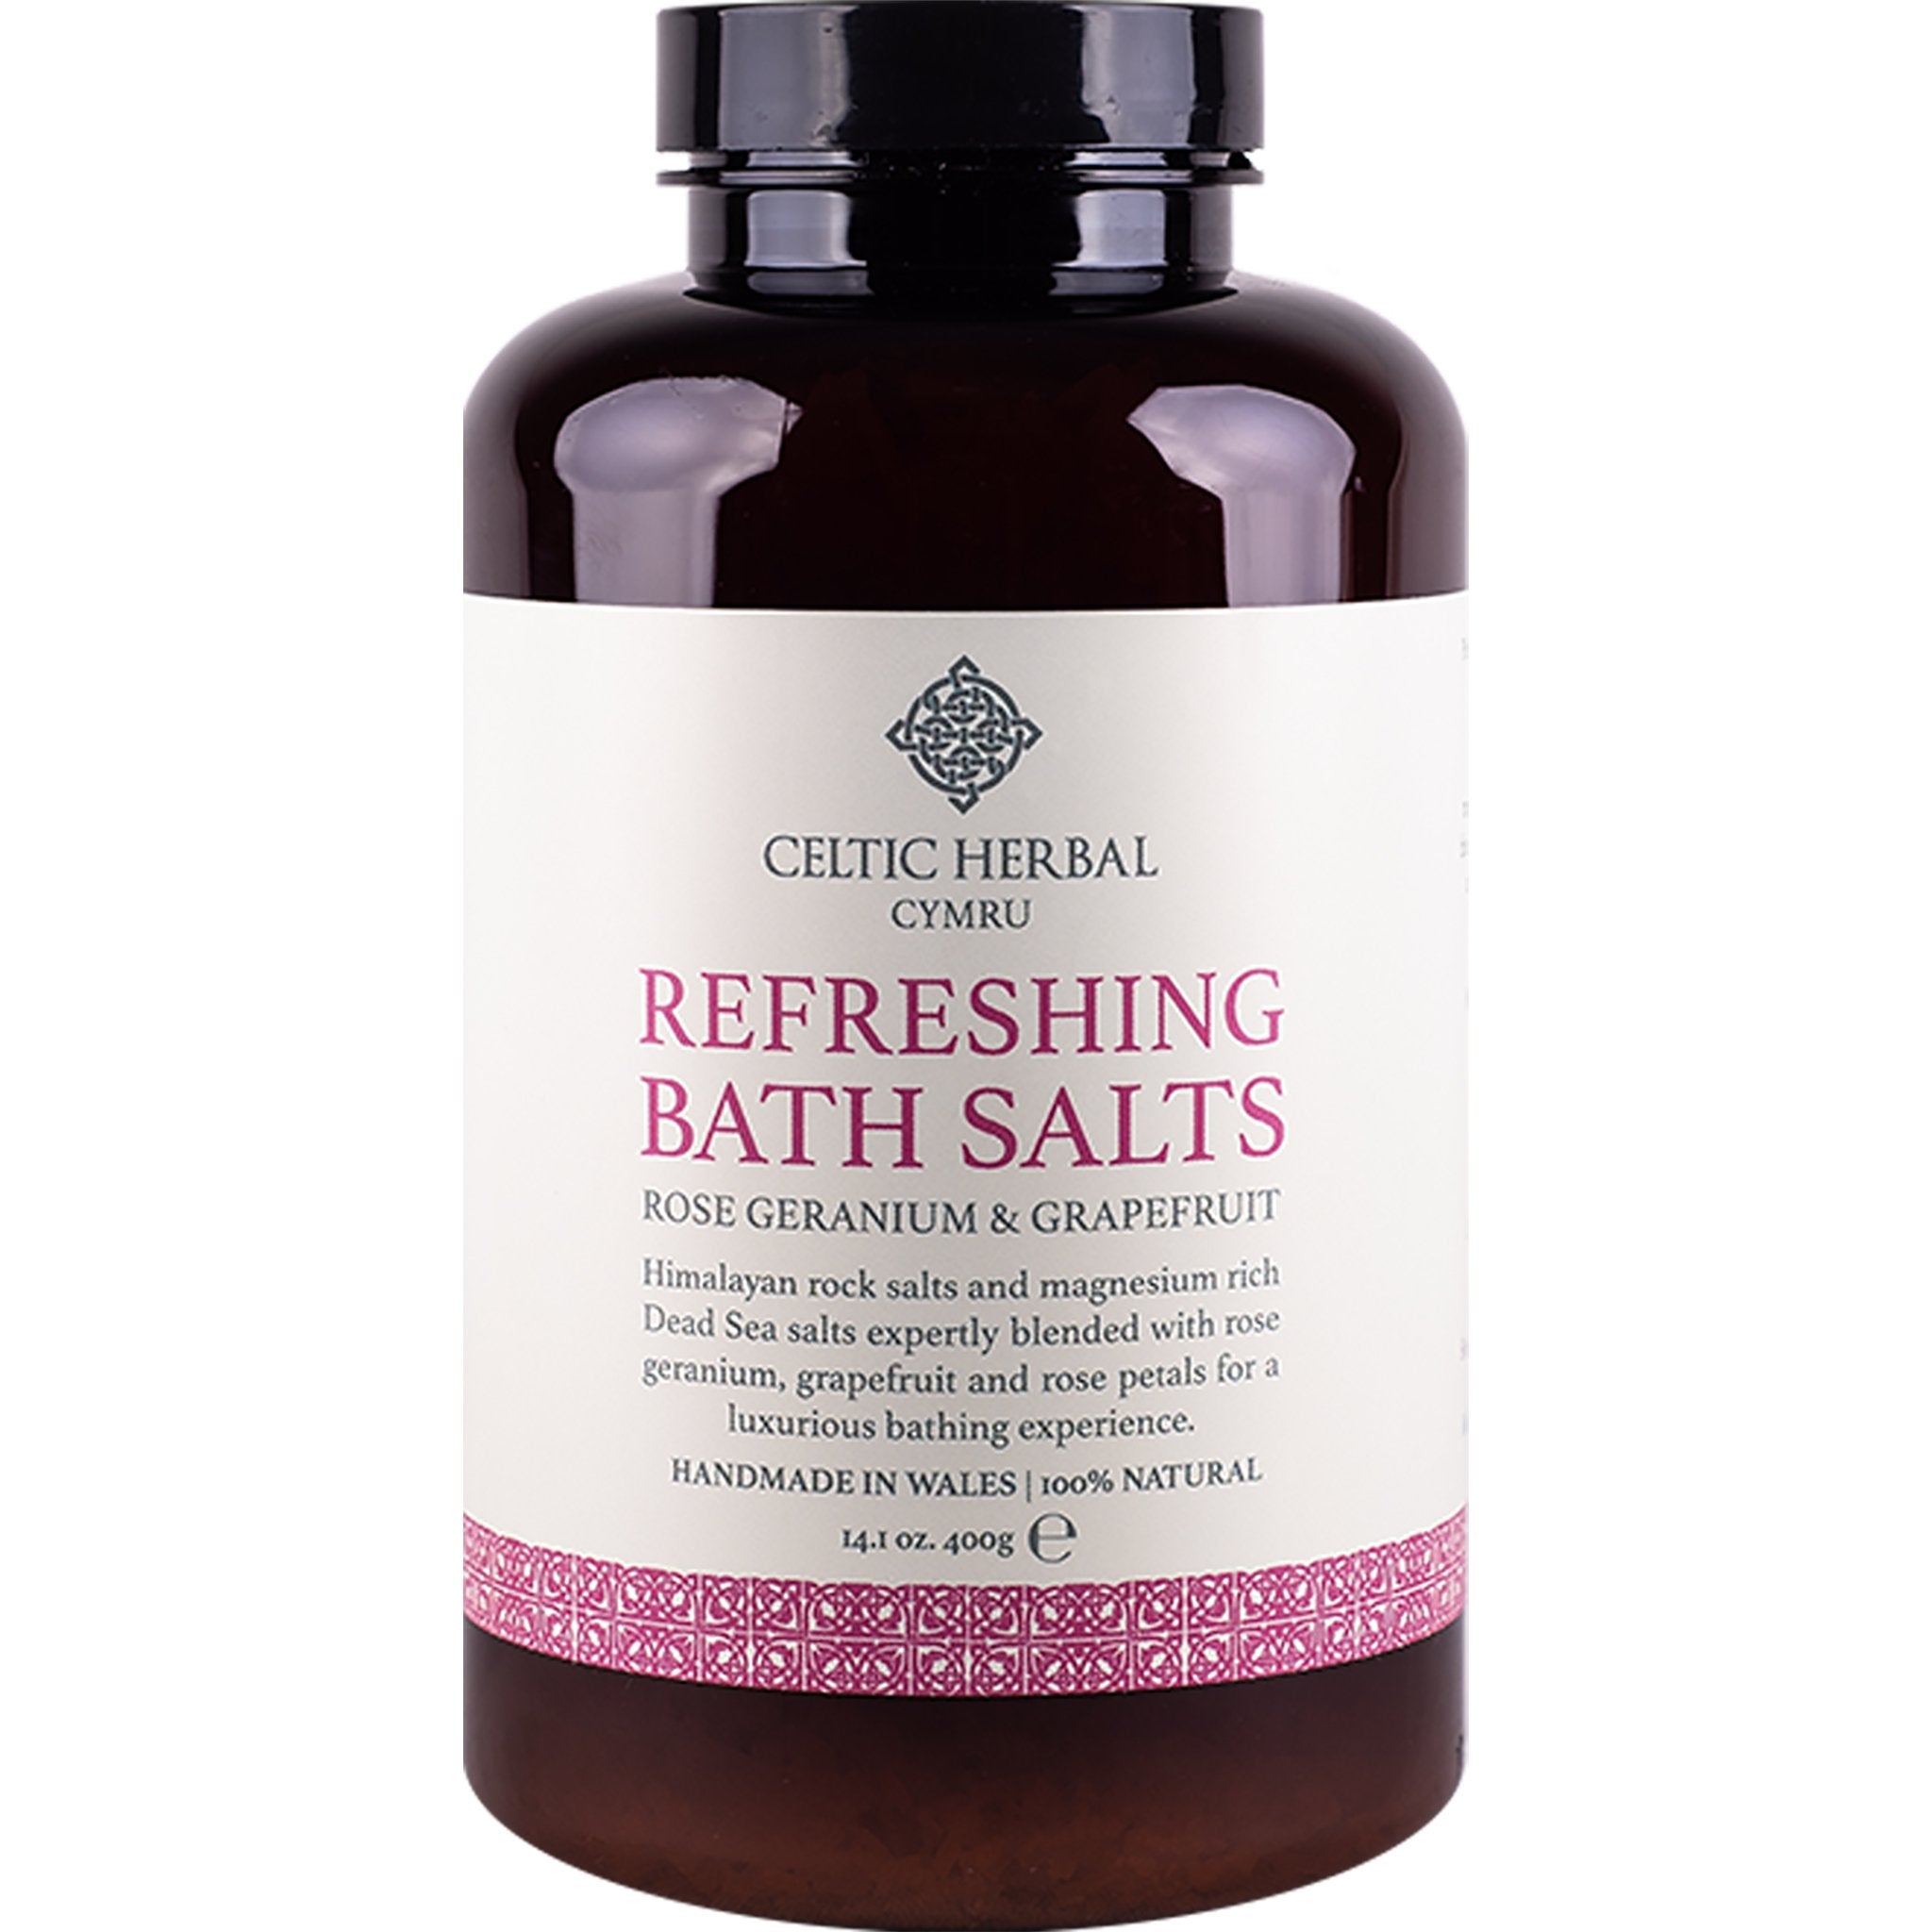 Refreshing Bath Salts with Rose Geranium & Grapefruit - mypure.co.uk